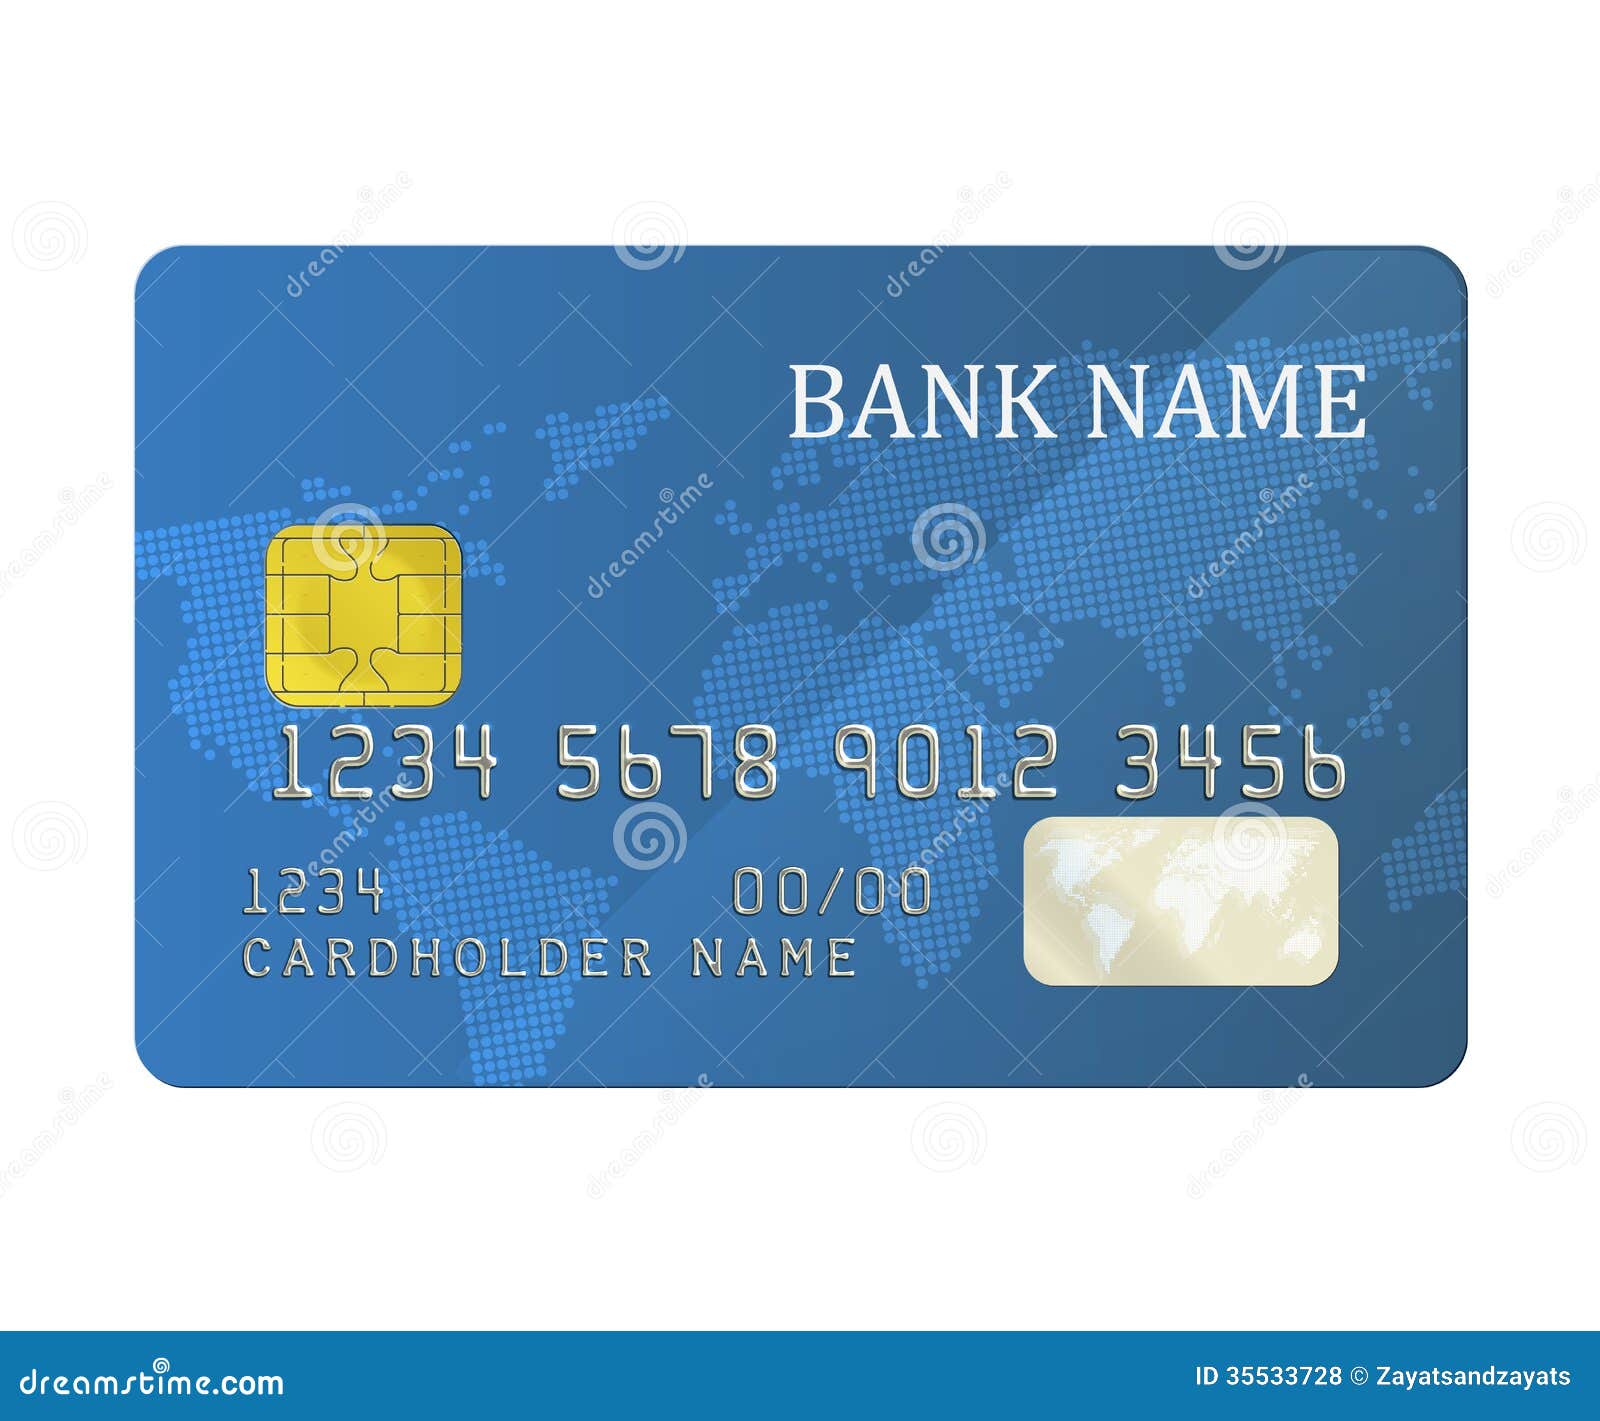 Bank Card Royalty Free Stock Photos - Image: 35533728